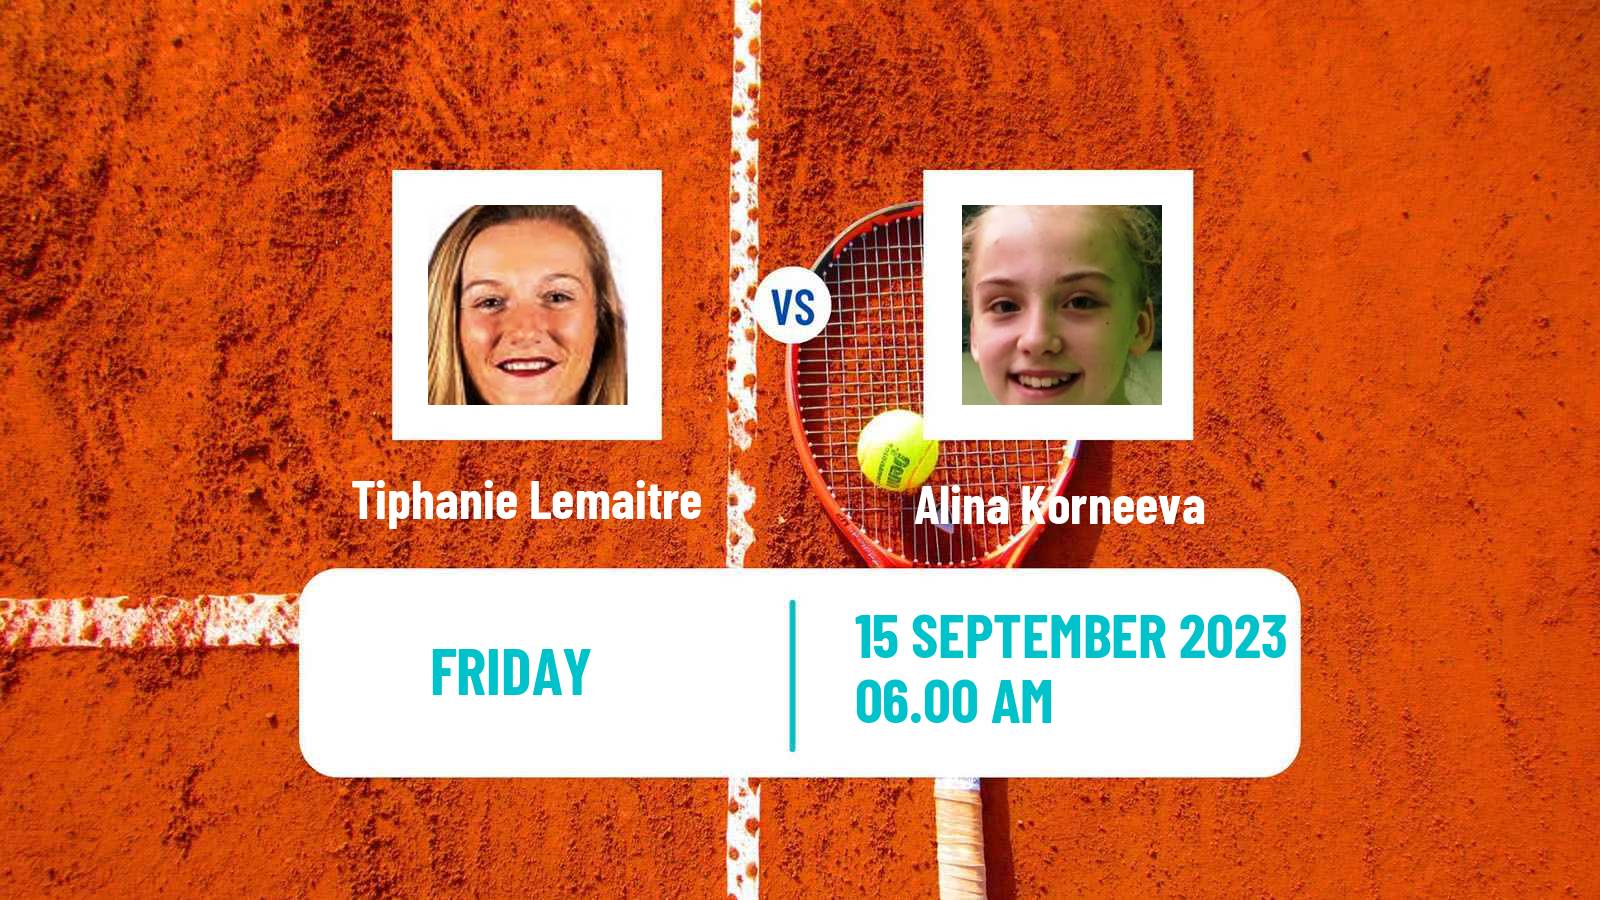 Tennis ITF W80 Le Neubourg Women Tiphanie Lemaitre - Alina Korneeva